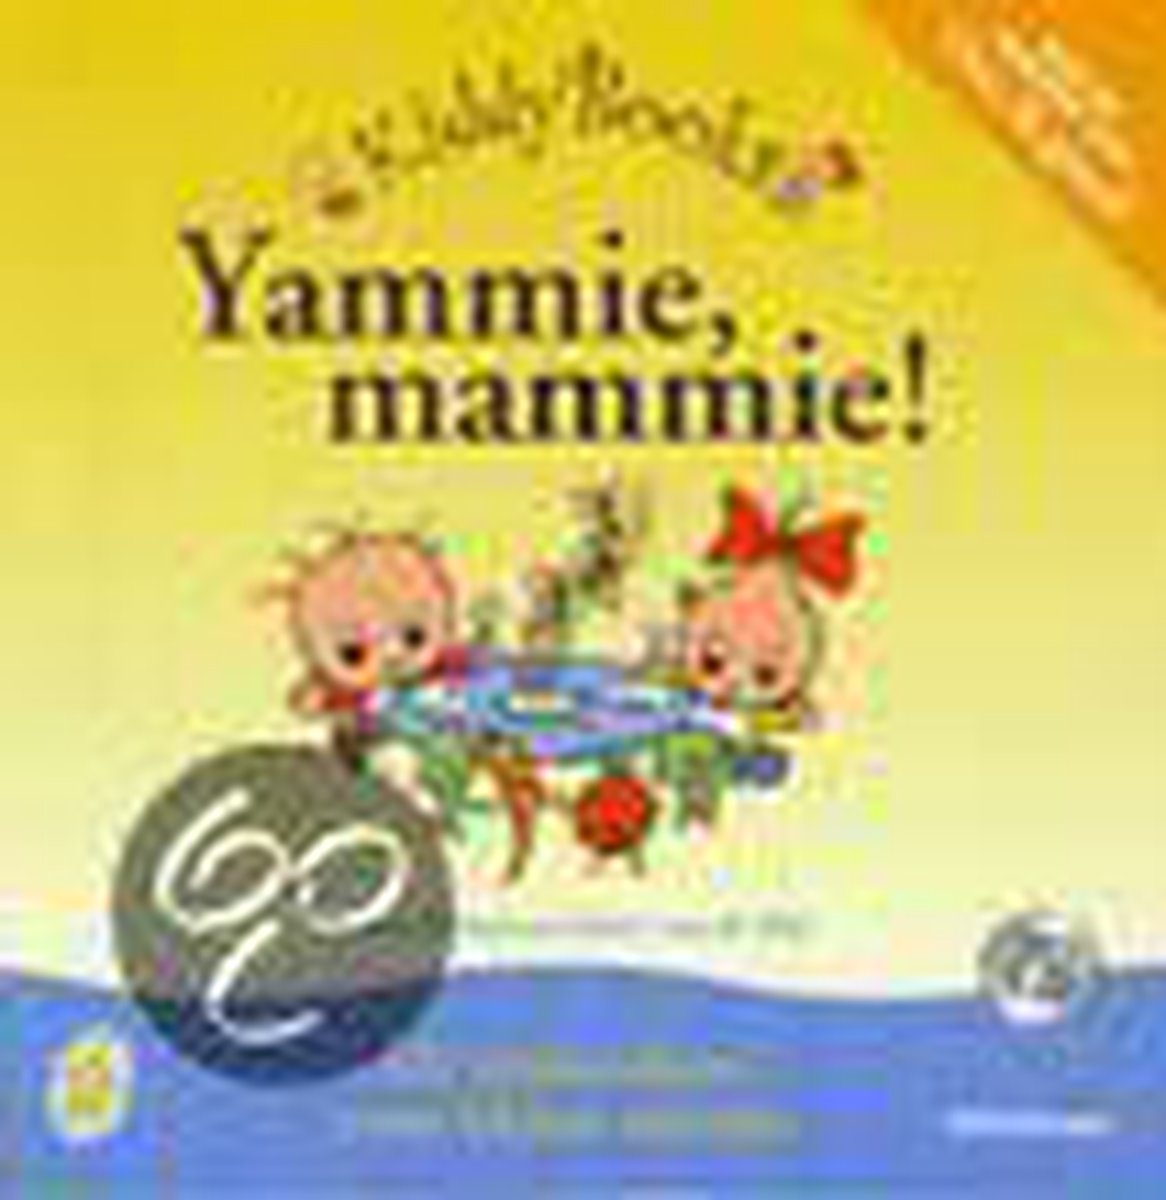 Yammie, mammie! / Kiddy Books